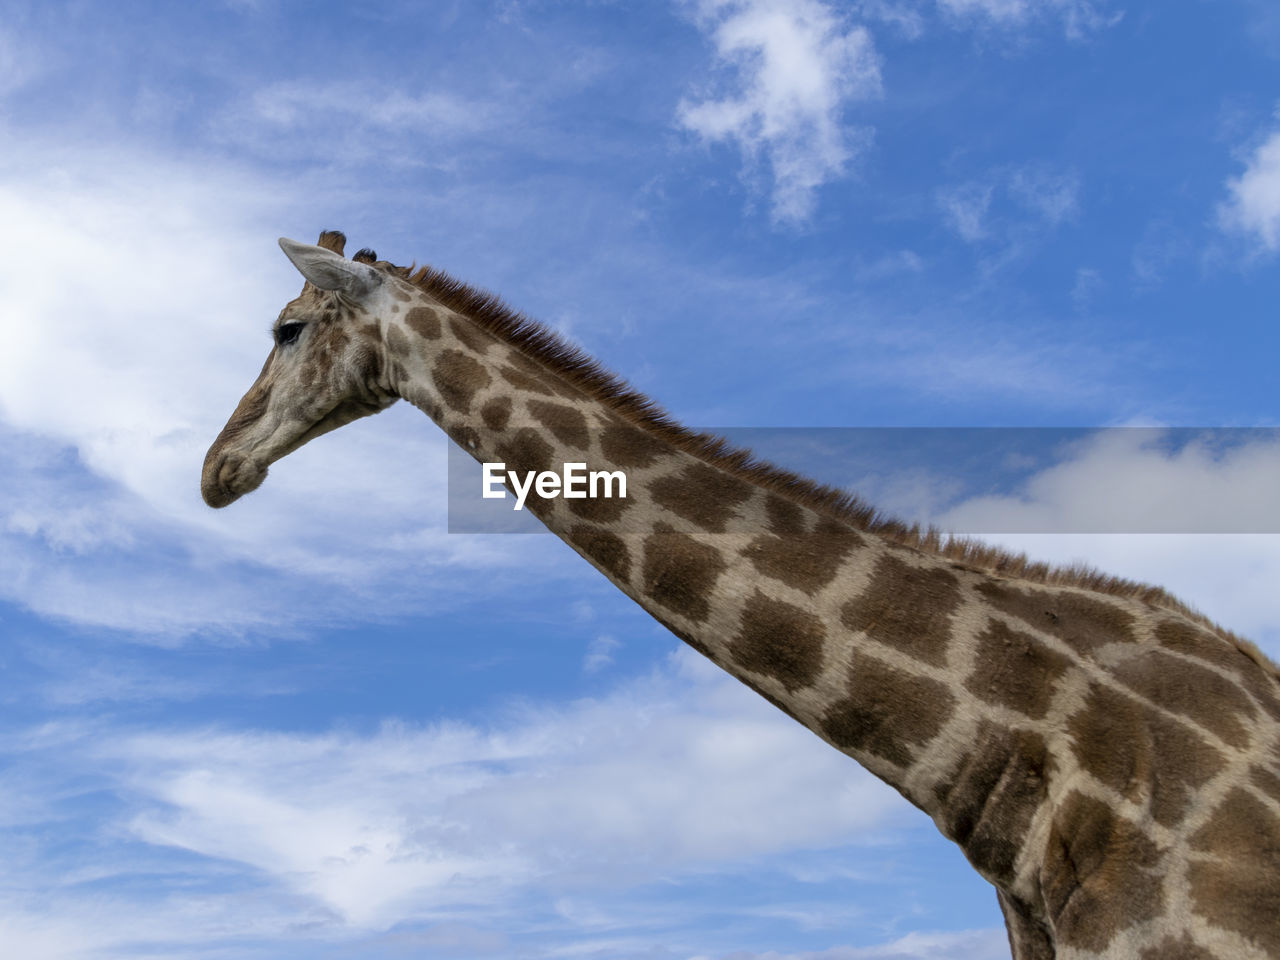 Low angle view of giraffe